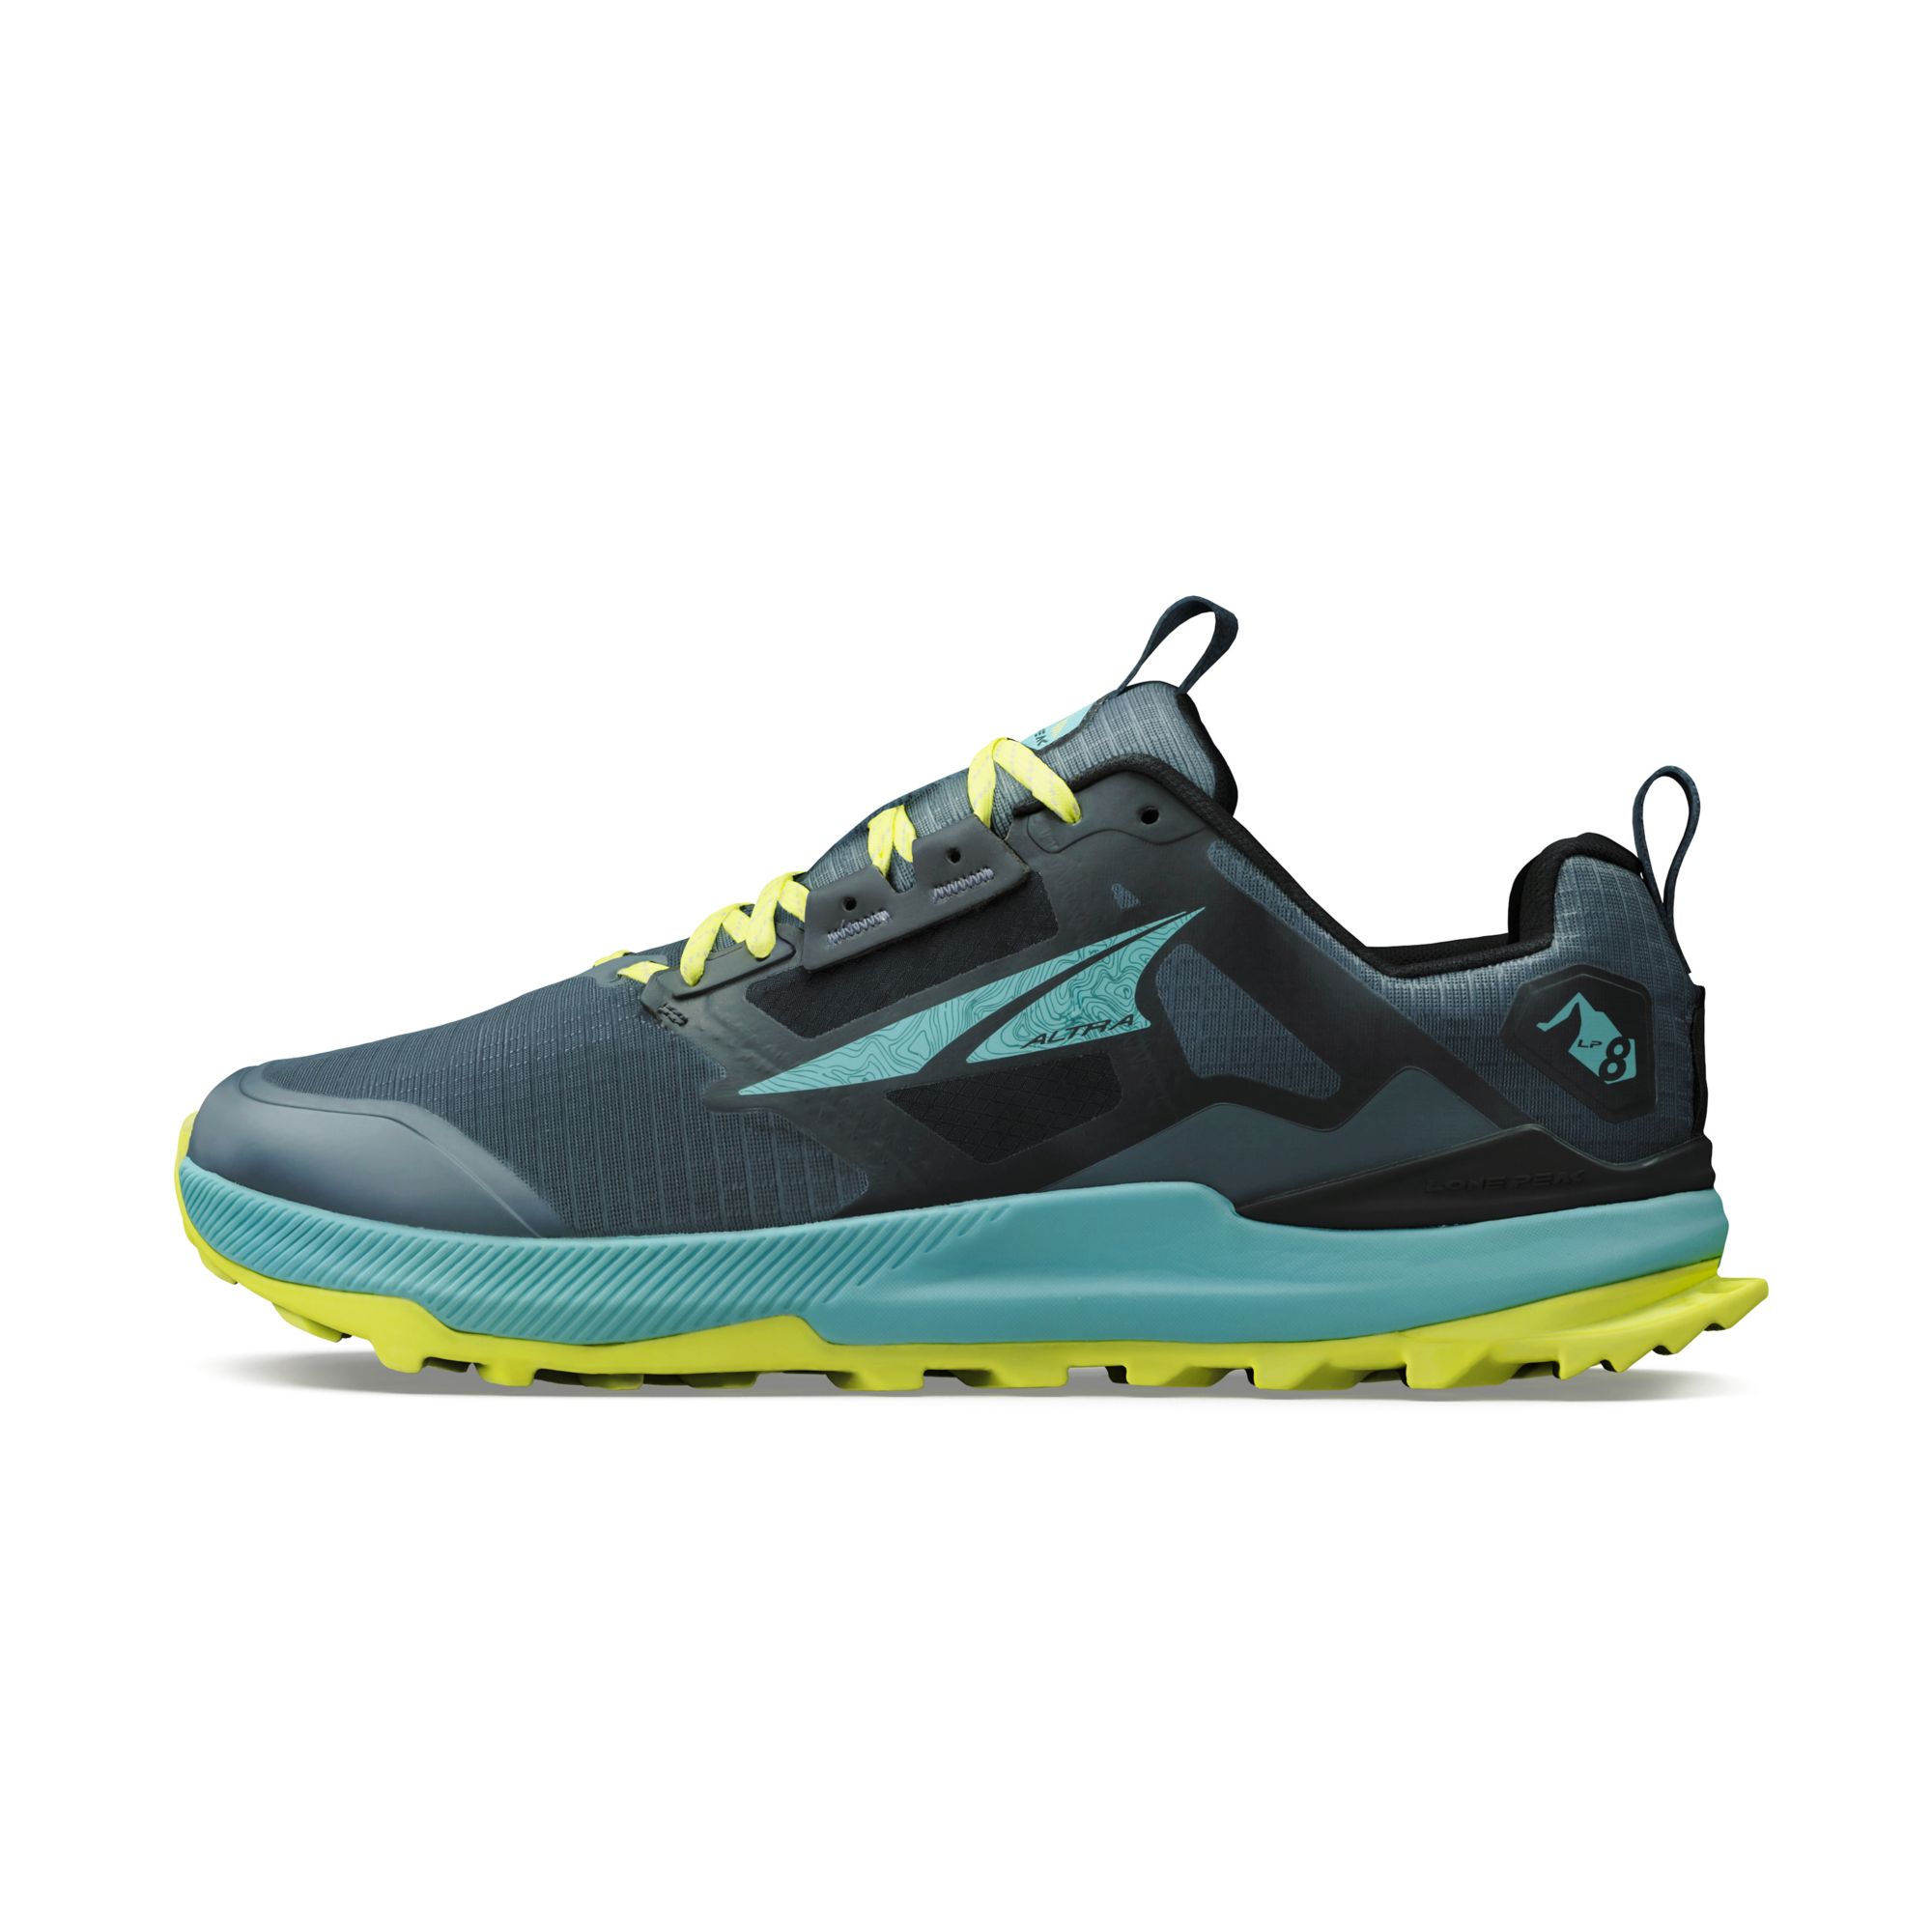 Lone Peak 8 Men’s Trail Running Shoe | Altra Running